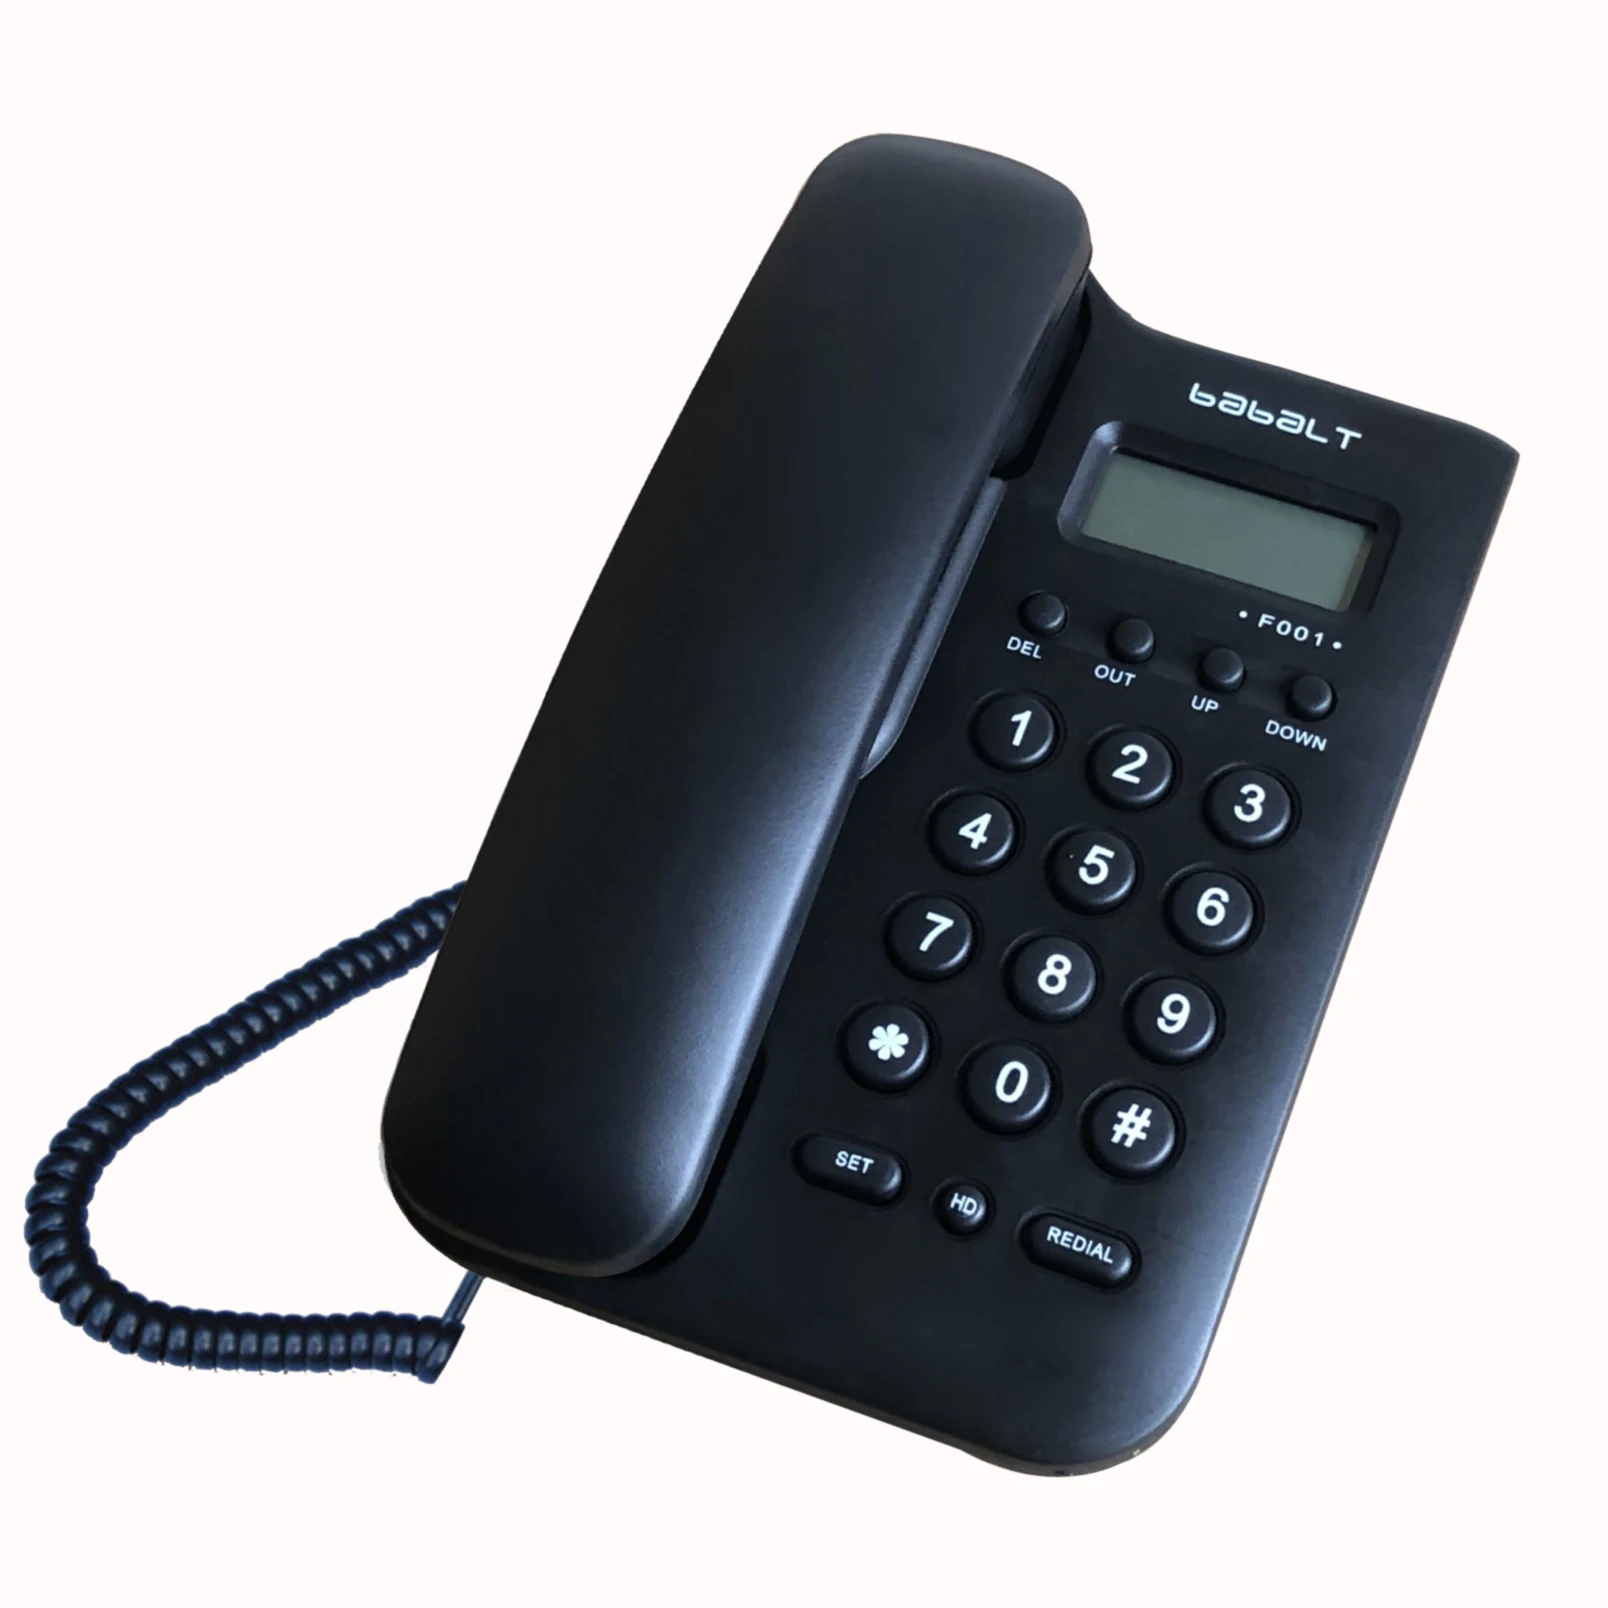 Teléfono fijo de escritorio, teléfono con cable con pantalla de  identificación de llamadas para oficina en casa, hotel, restaurante, fácil  de instalar